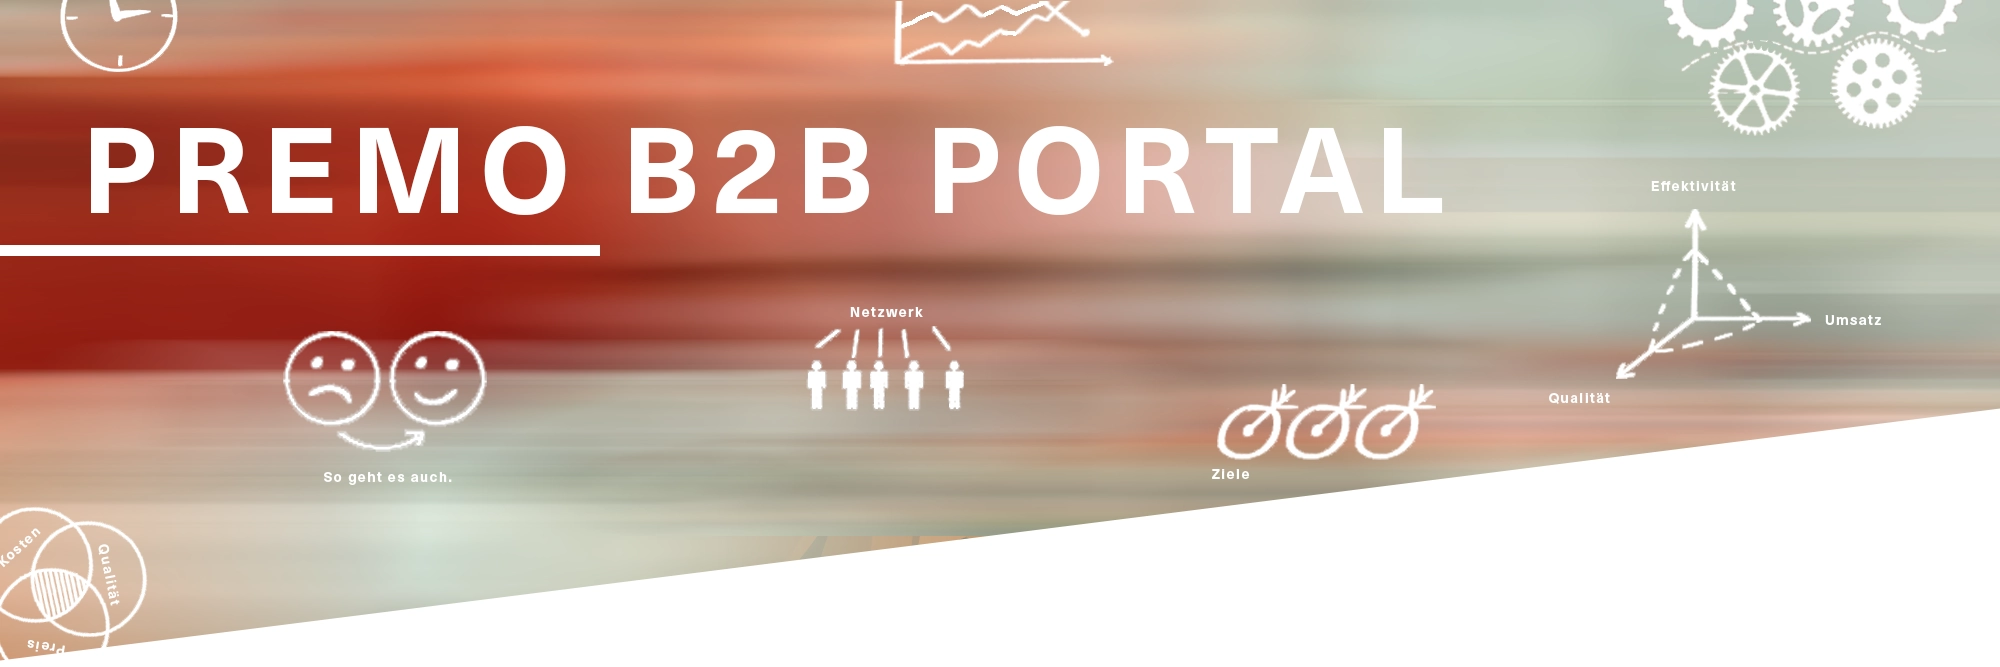 Premo B2B Portal - Kundenportal